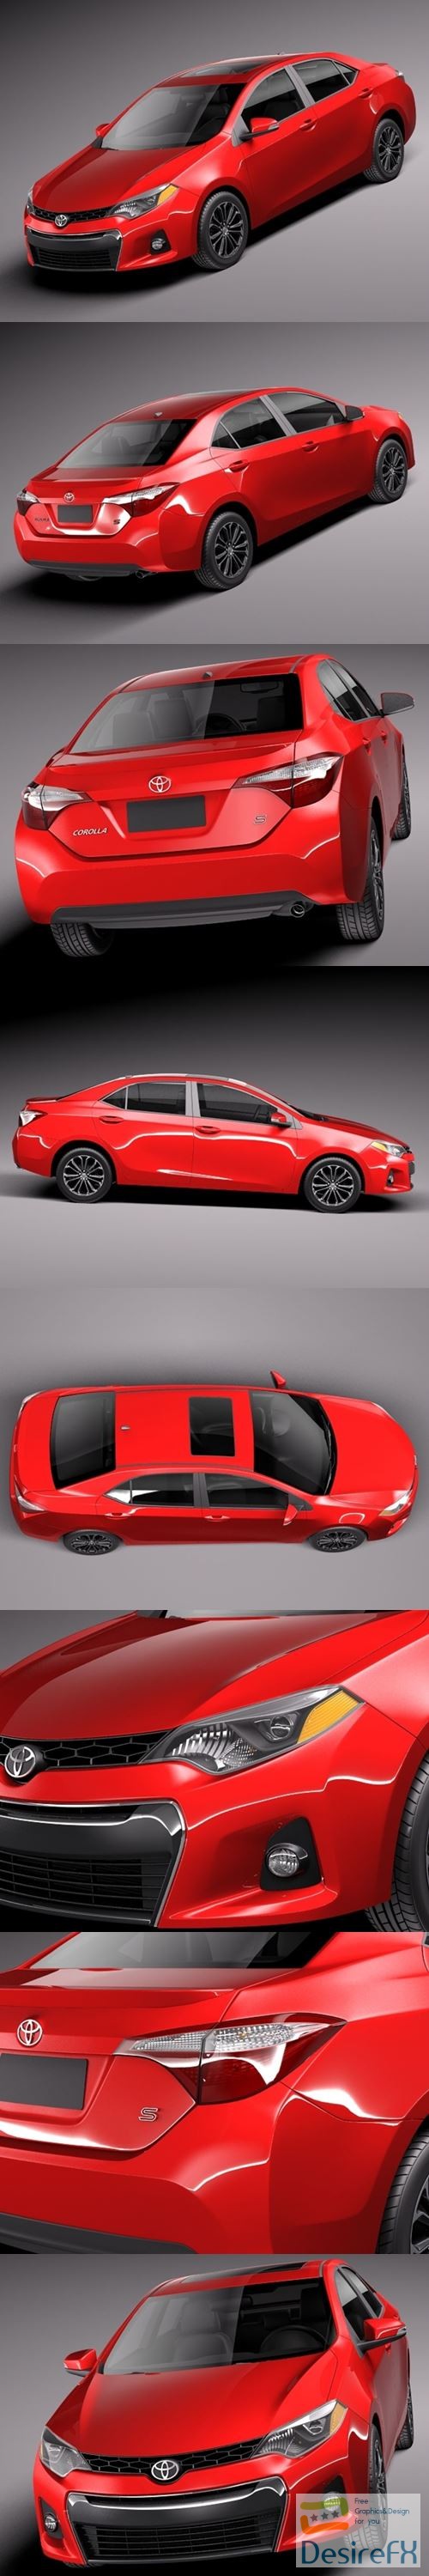 Toyota Corolla S 2014 USA 3D Model